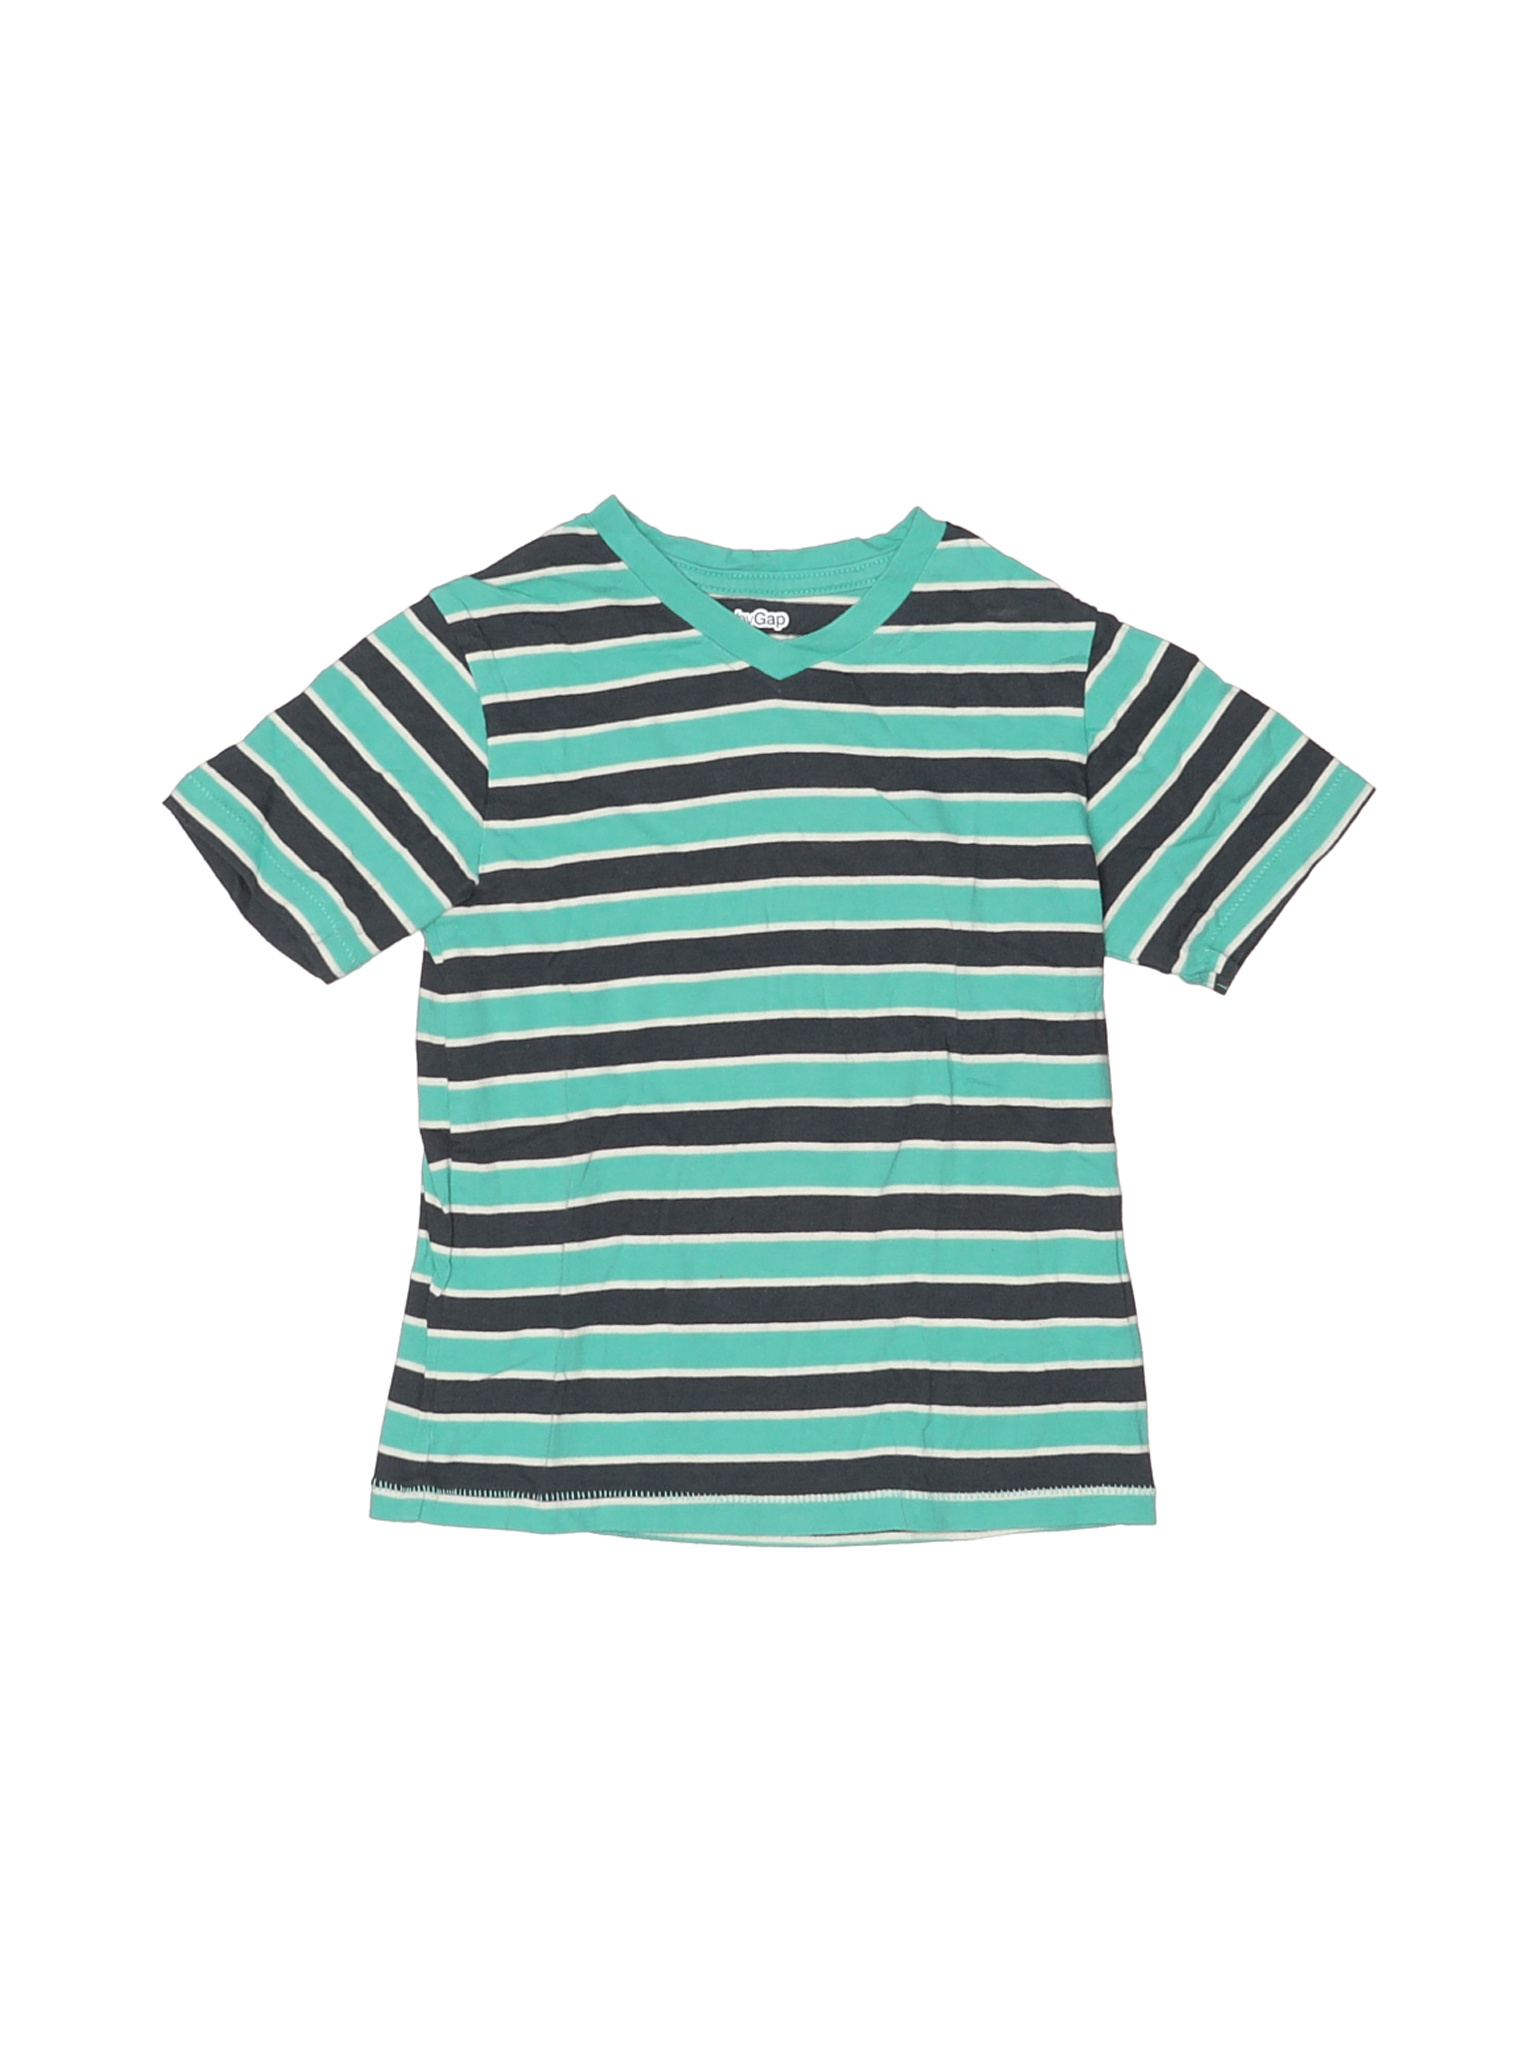 Baby Gap Boys Green Short Sleeve T-Shirt 5T | eBay